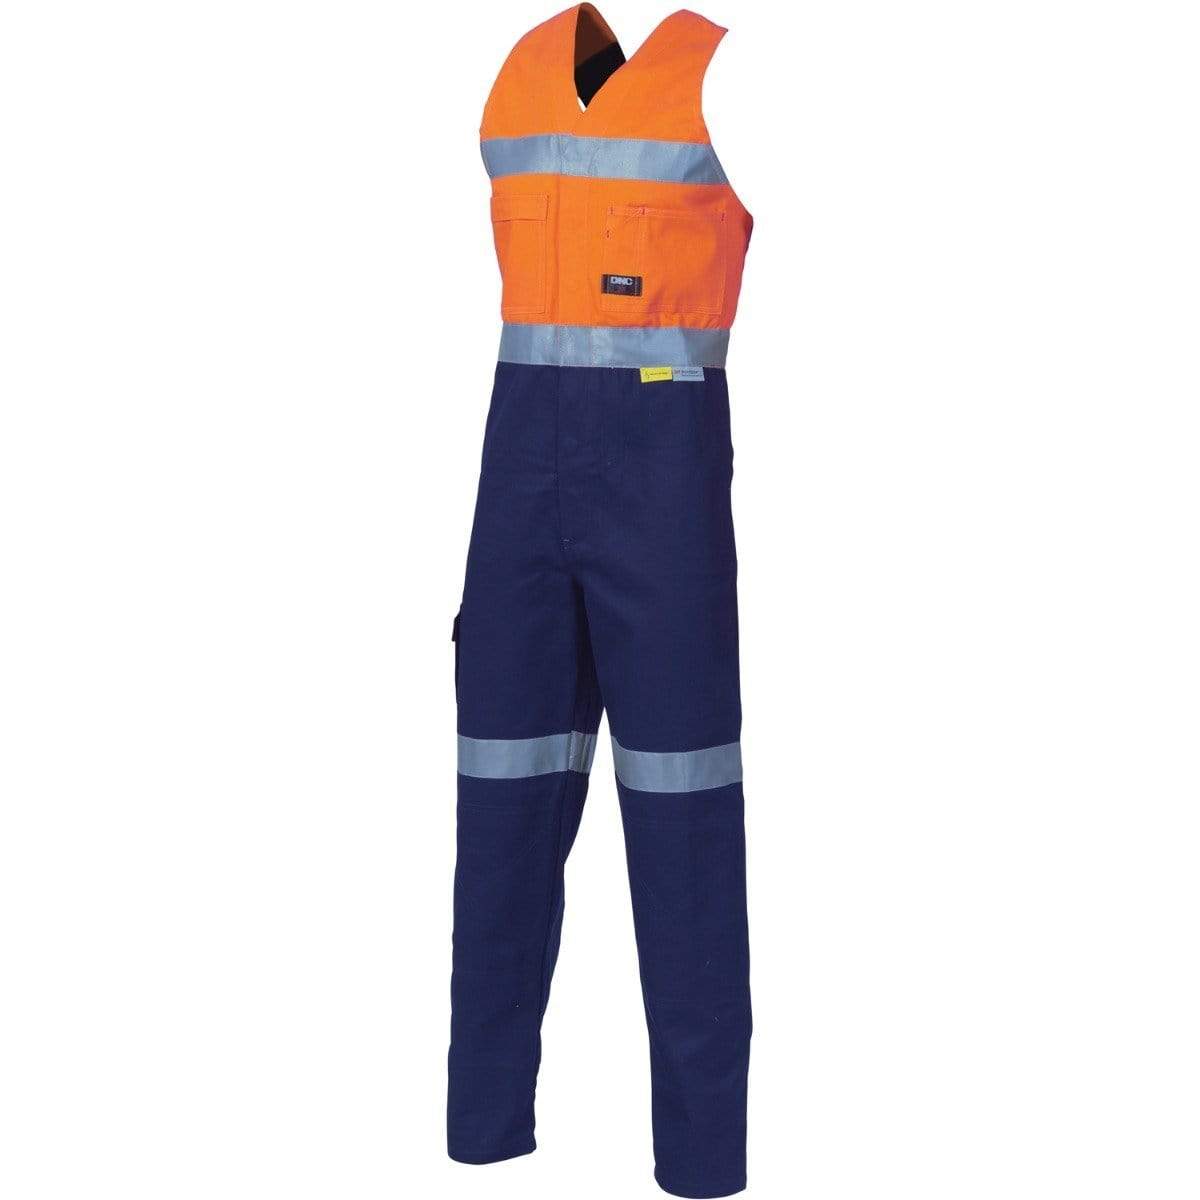 Dnc Workwear Hi-vis Cotton Action Back With 3m Reflective Tape - 3857 Work Wear DNC Workwear Orange/Navy 77R 